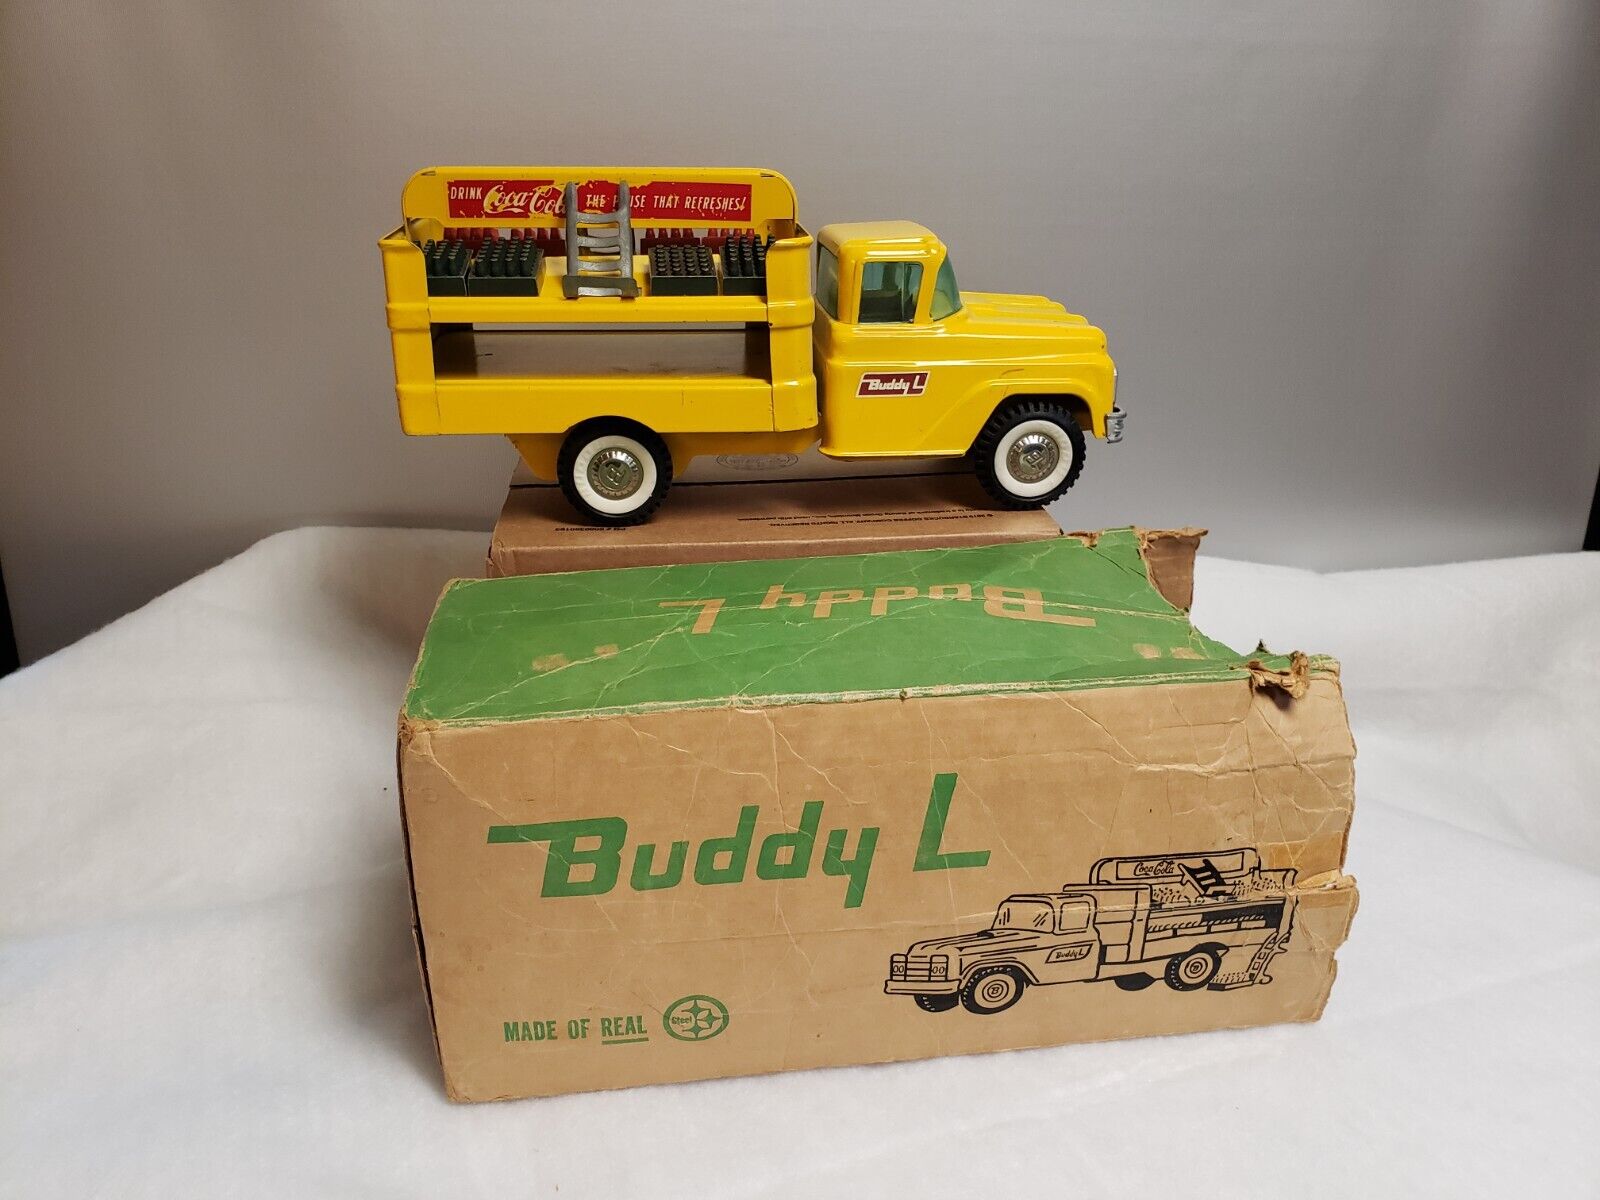 Vtg. 1960's Buddy L Coca Cola delivery truck,partial box, bottles, hand trucks